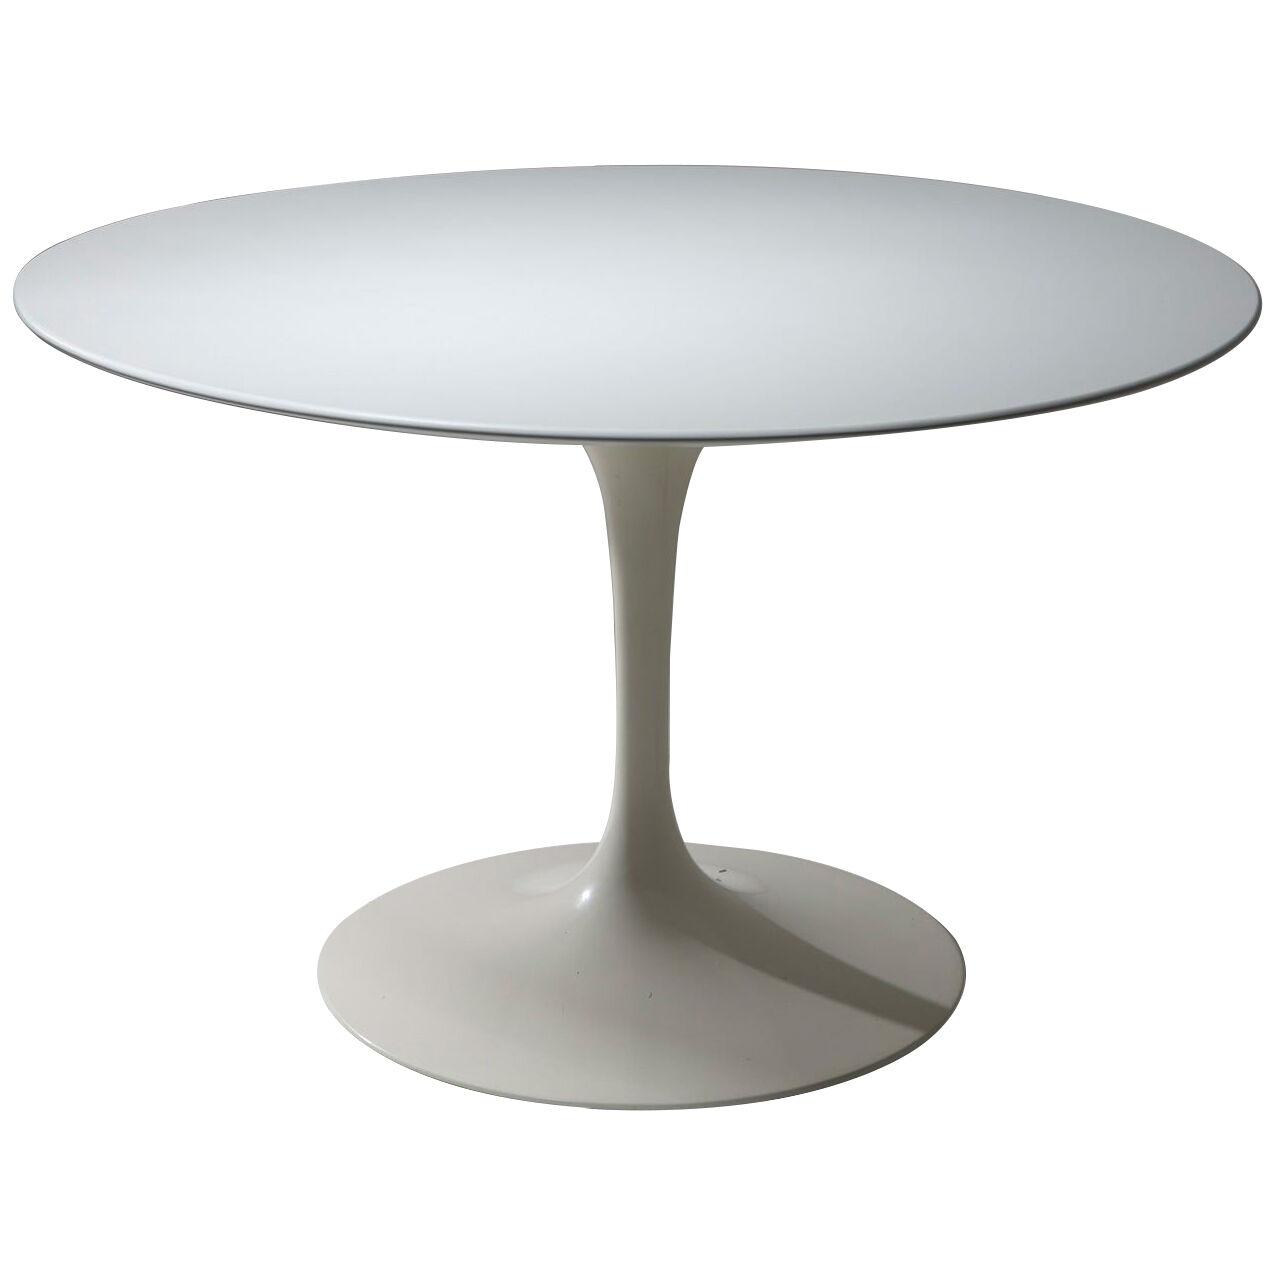 "Tulip" Dining Table by Eero Saarinen for Knoll